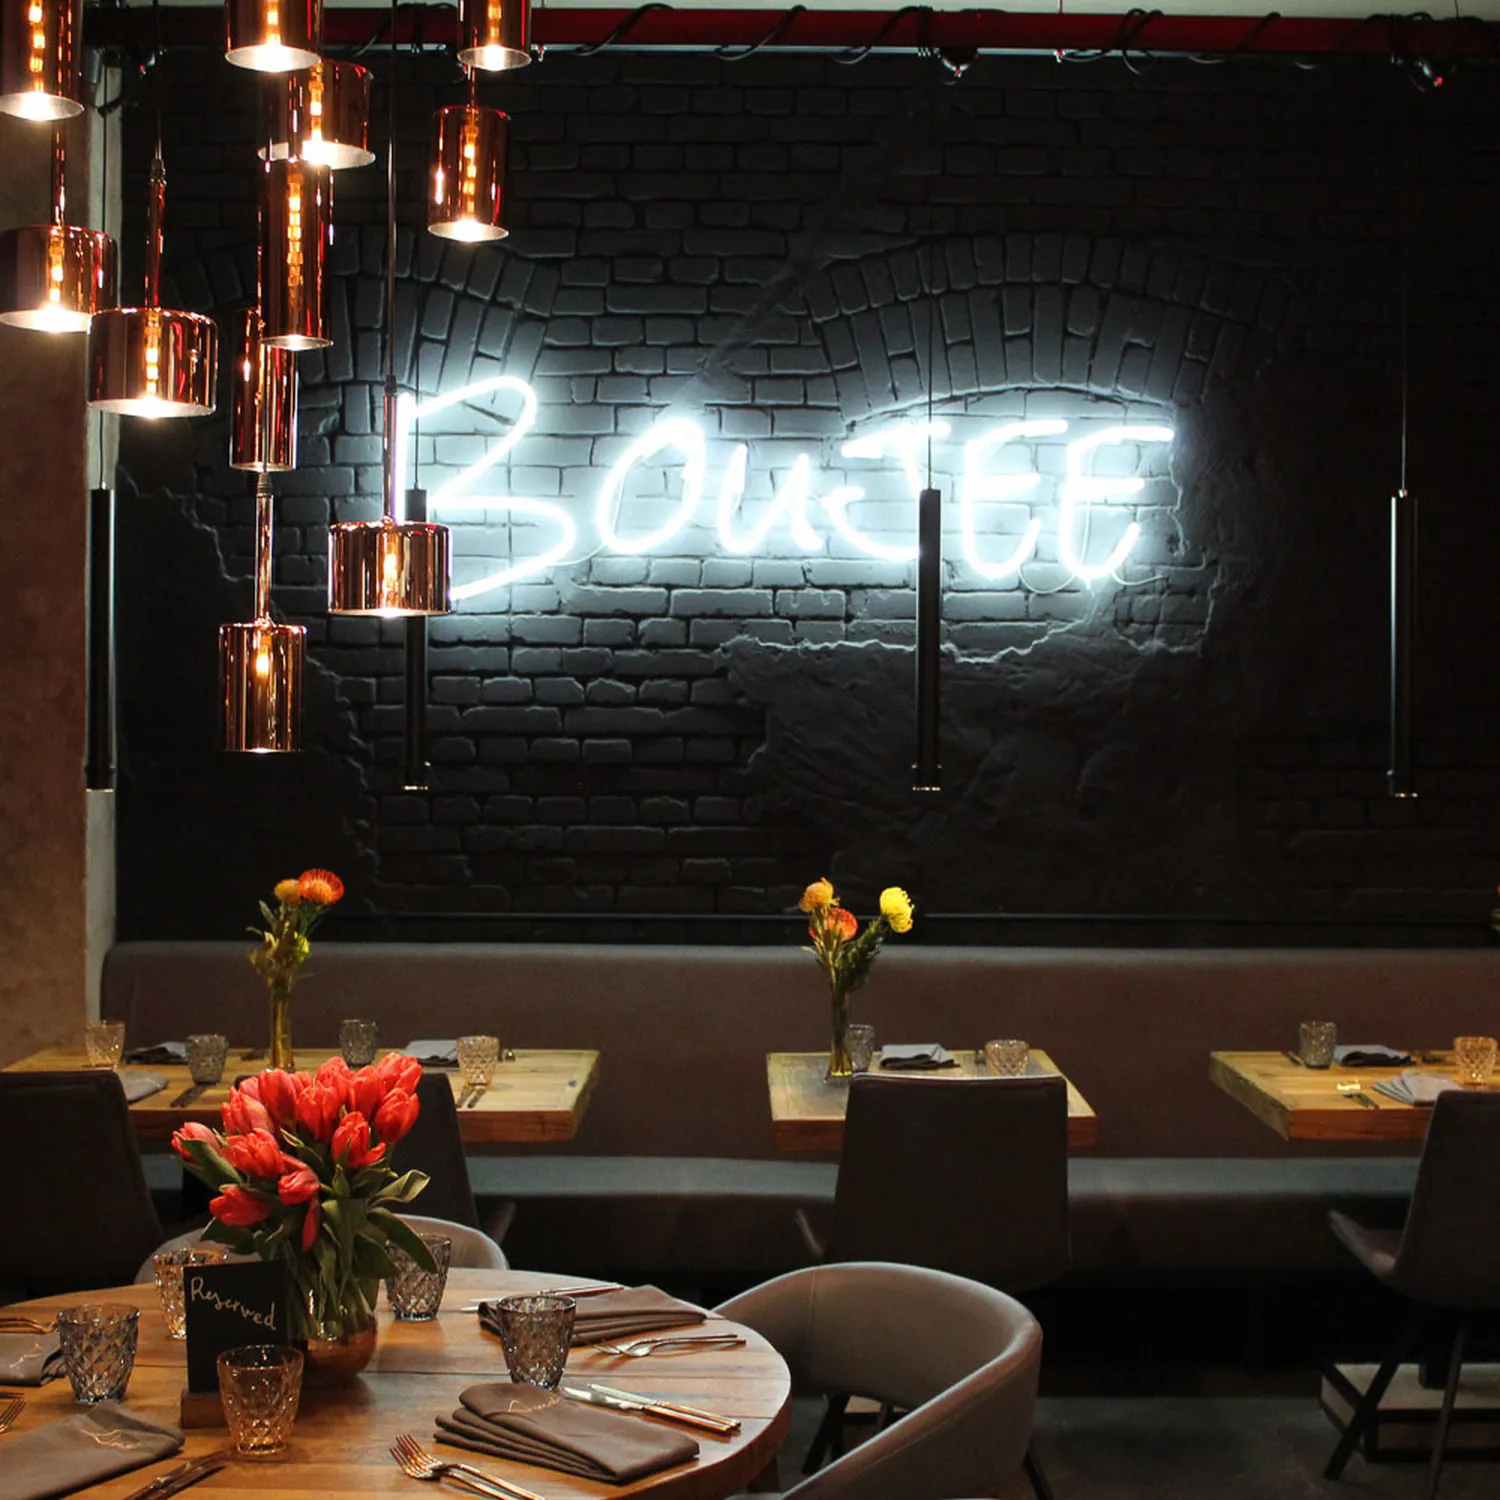 Boujee restaurant Berlin